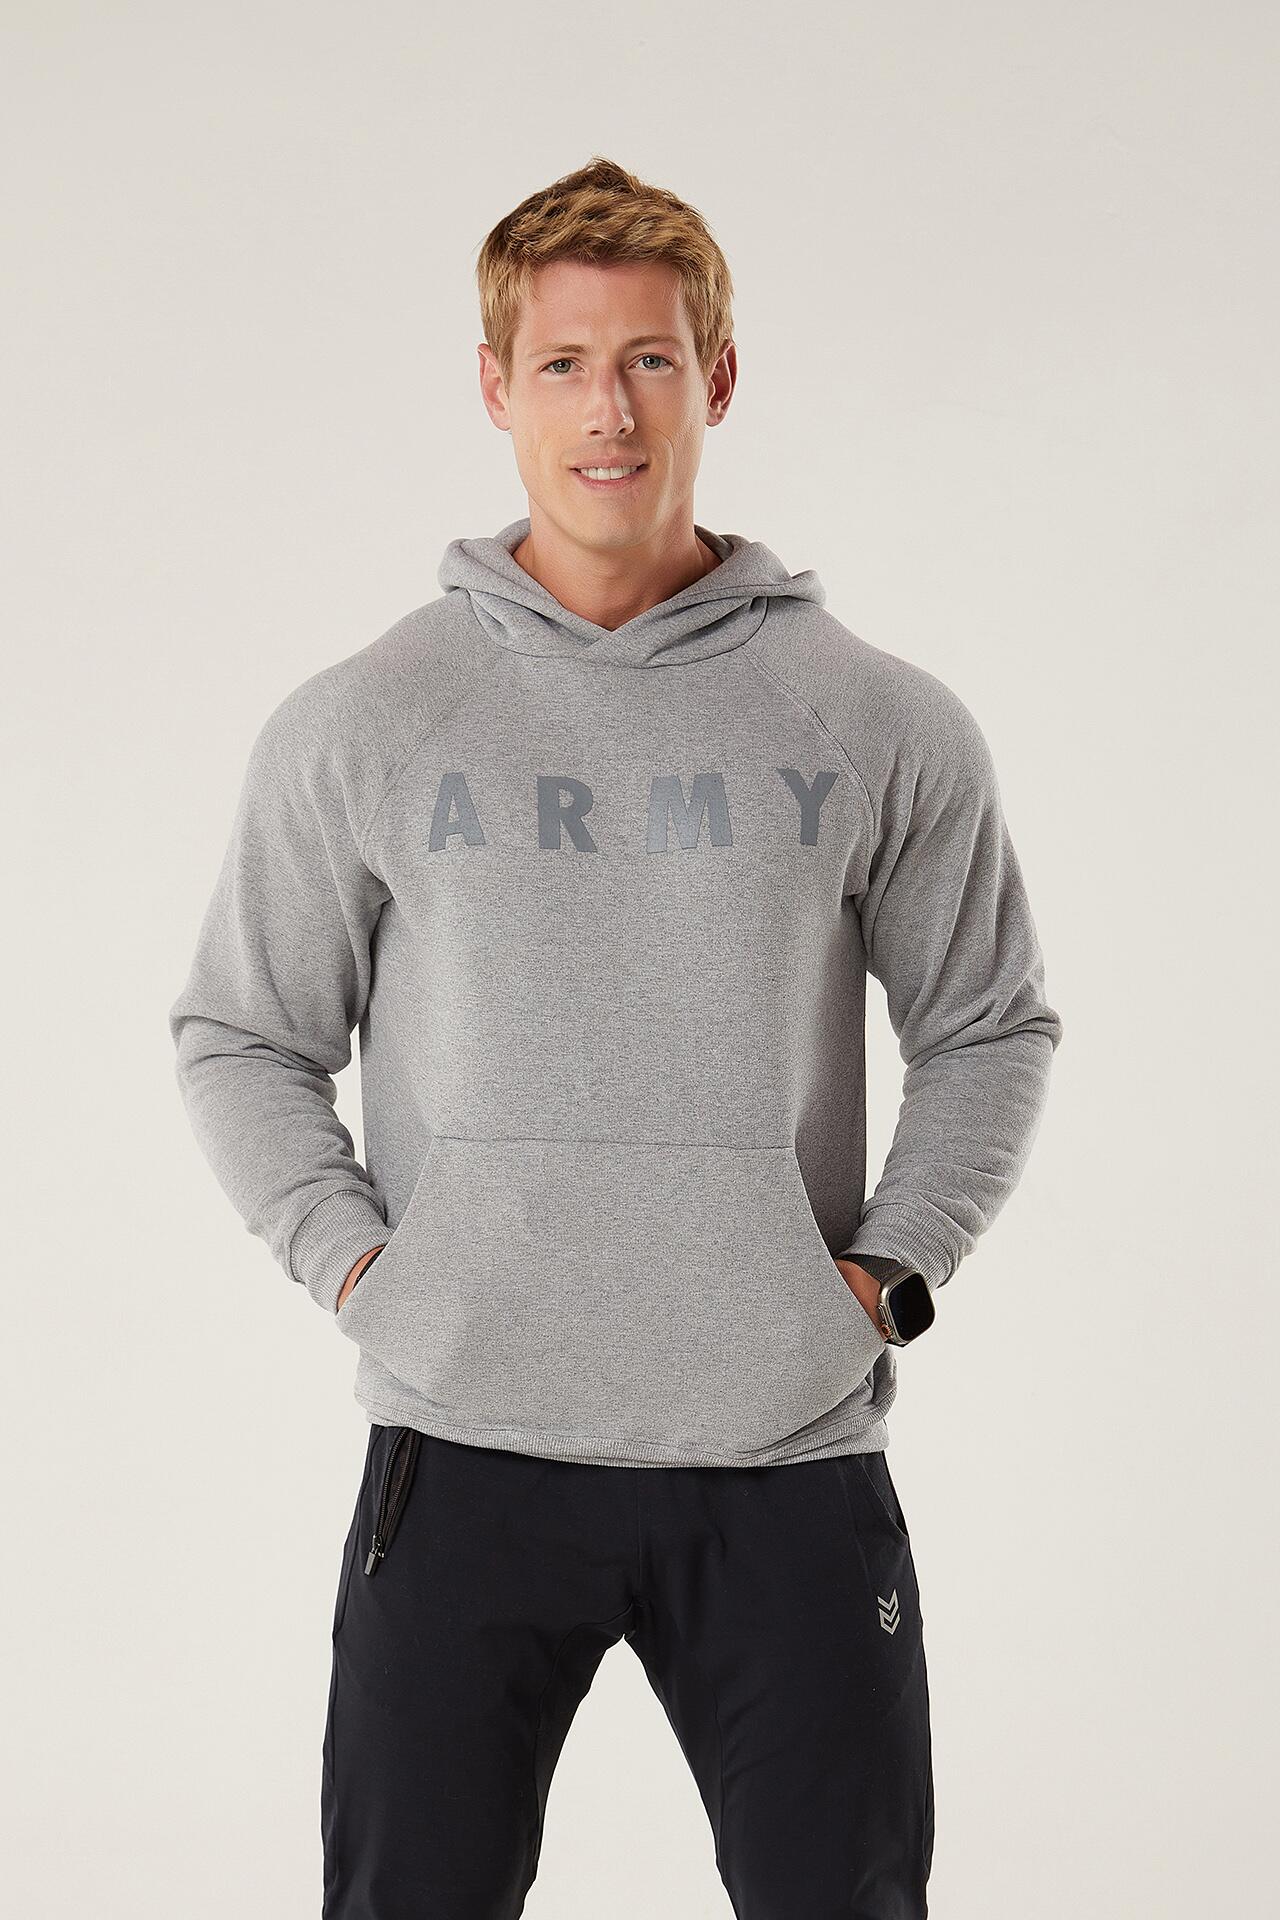 Comprar Camiseta Dry Fit Athleisure Preta - ARMYBR